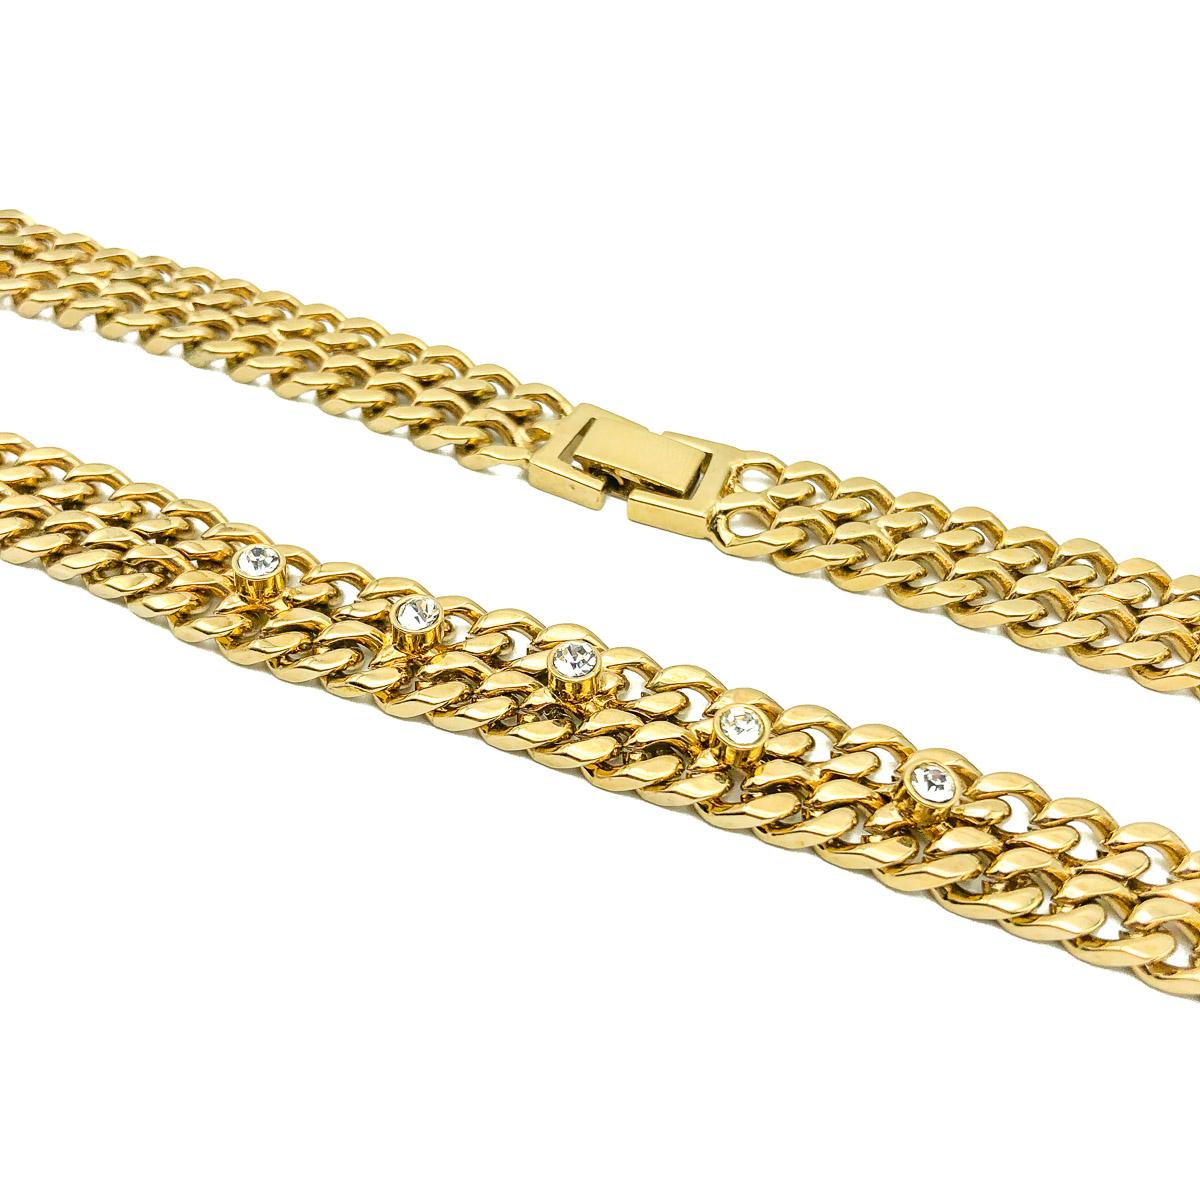 50k gold chain